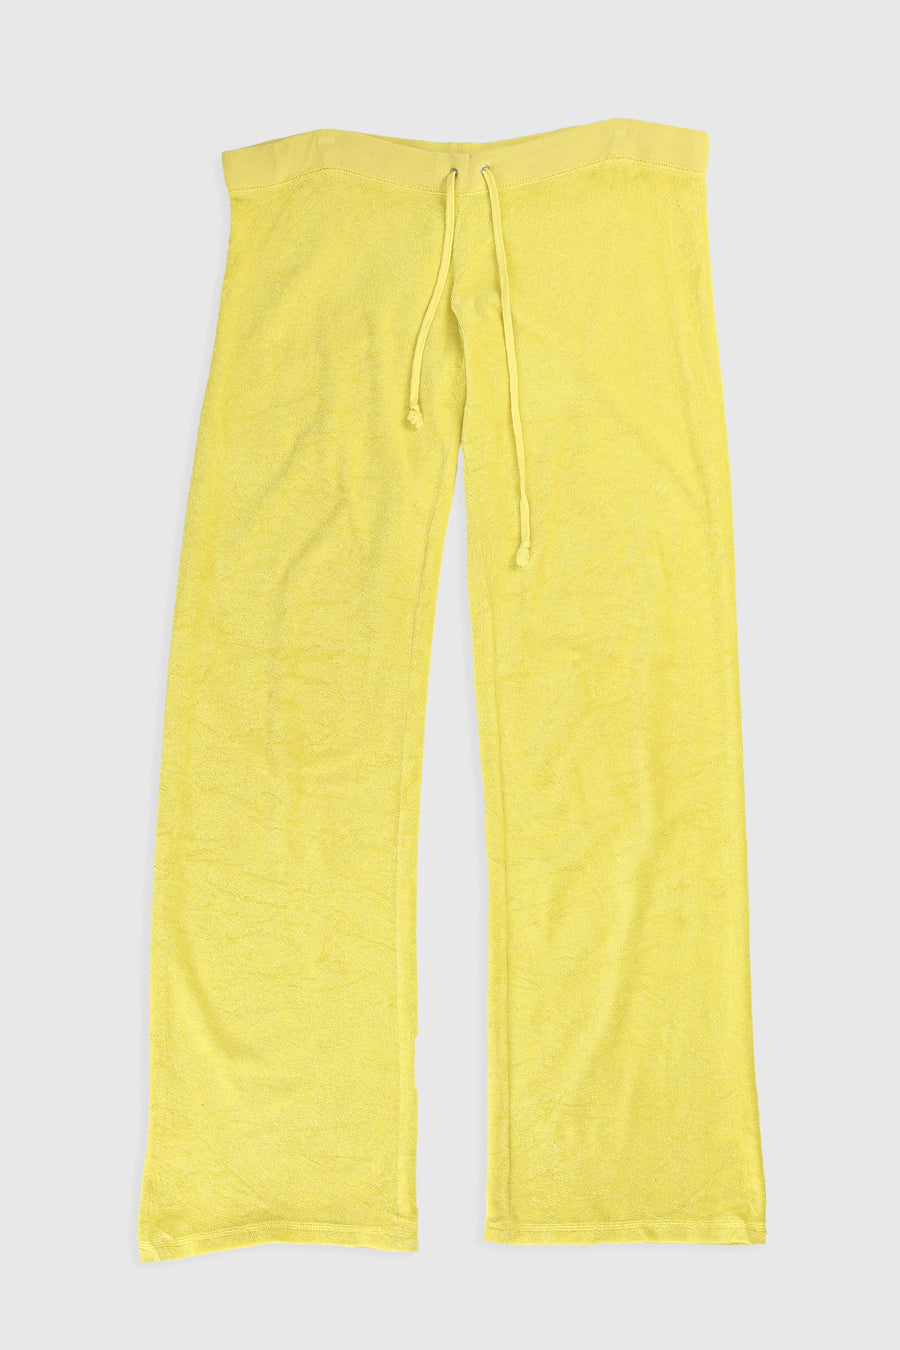 Vintage Juicy Couture Terrycloth Pants